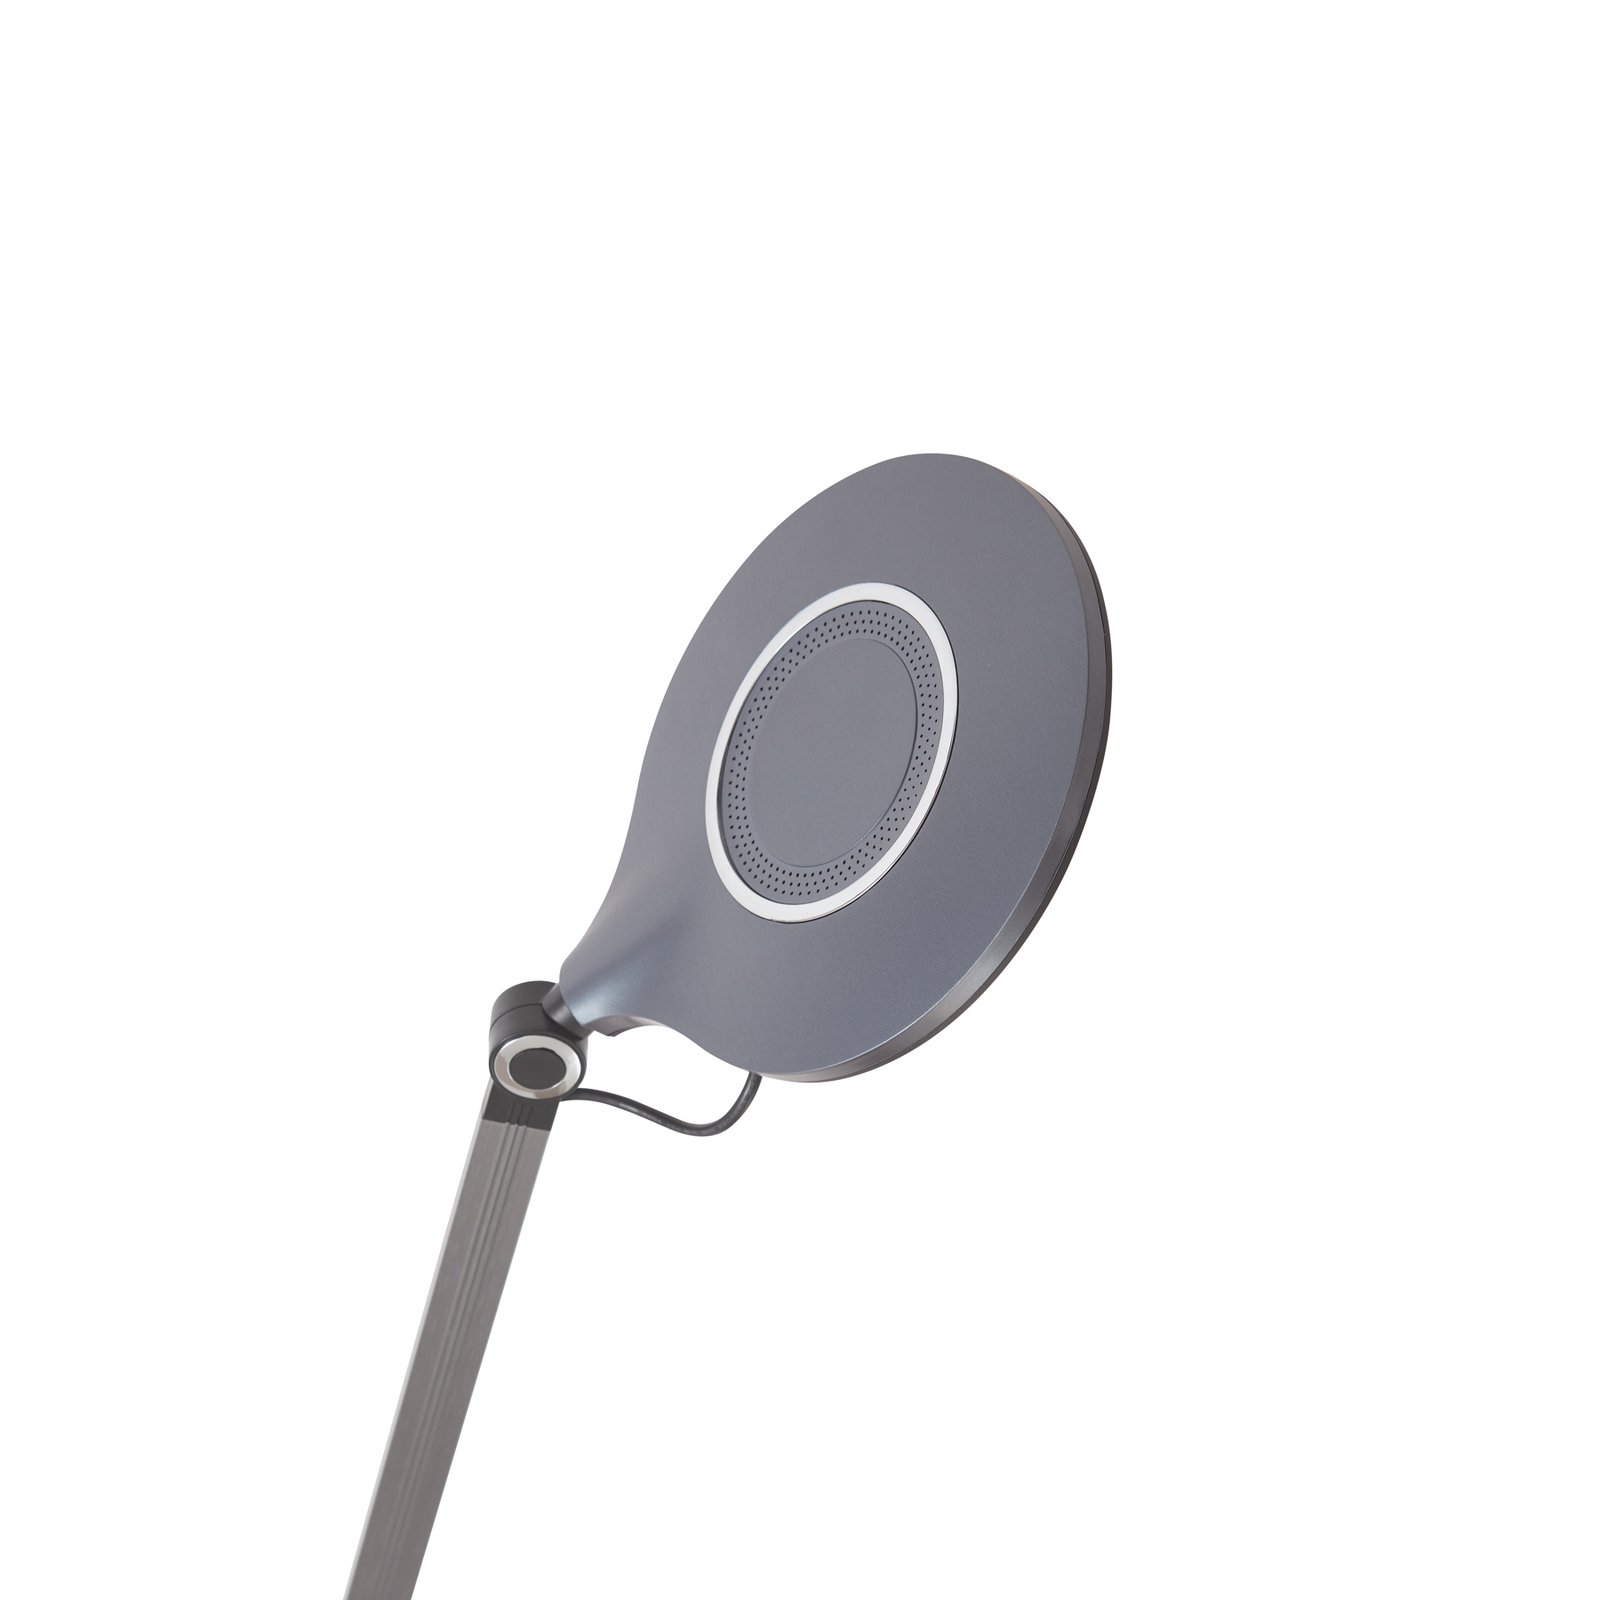 Lindby LED svietidlo Nyxaris, sivé, kov, CCT, 52 cm